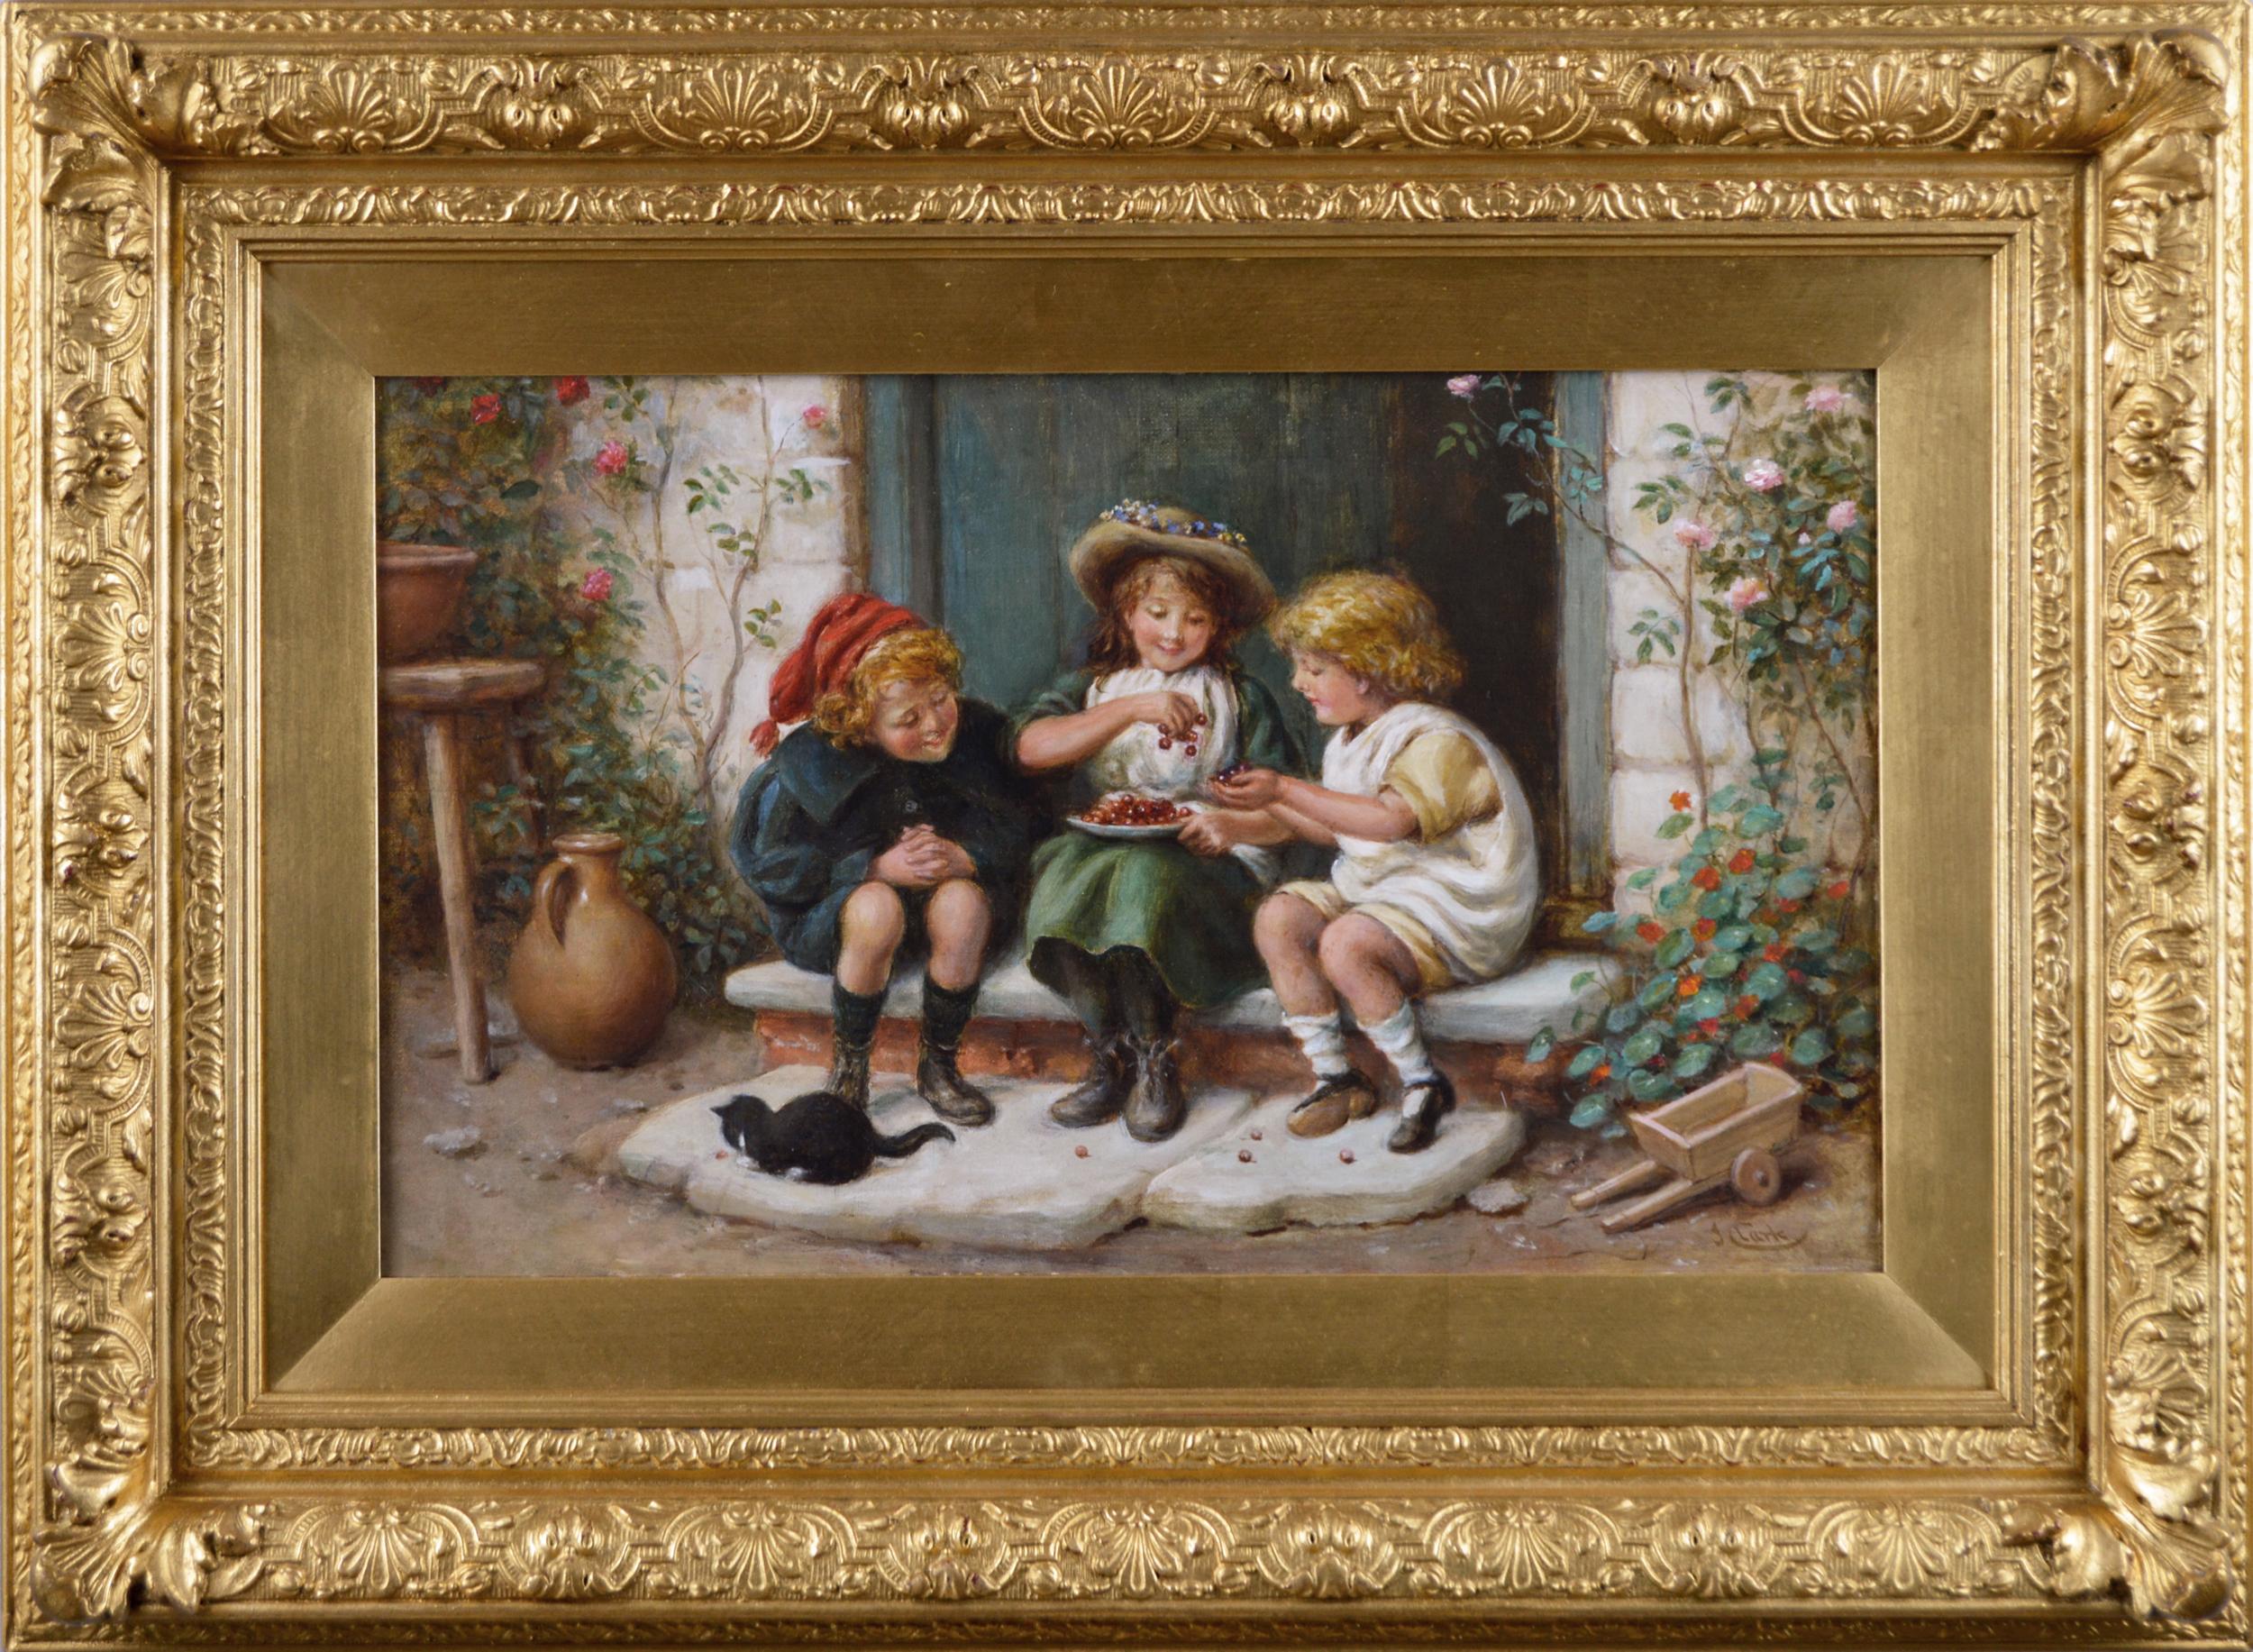 Joseph Clark  Figurative Painting - 19th Century genre oil painting of three children & a kitten